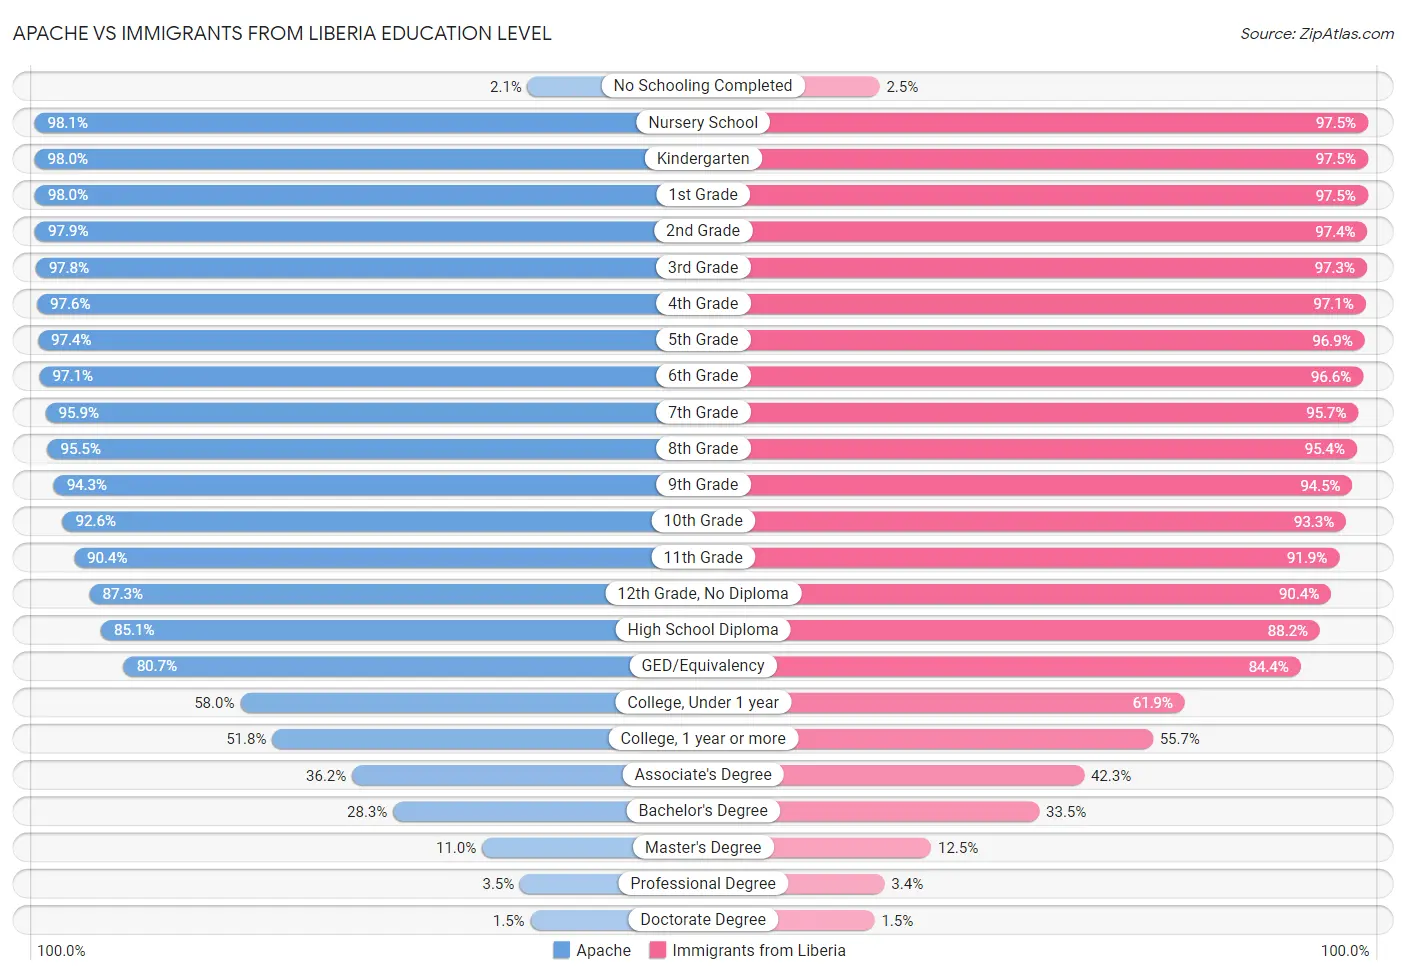 Apache vs Immigrants from Liberia Education Level